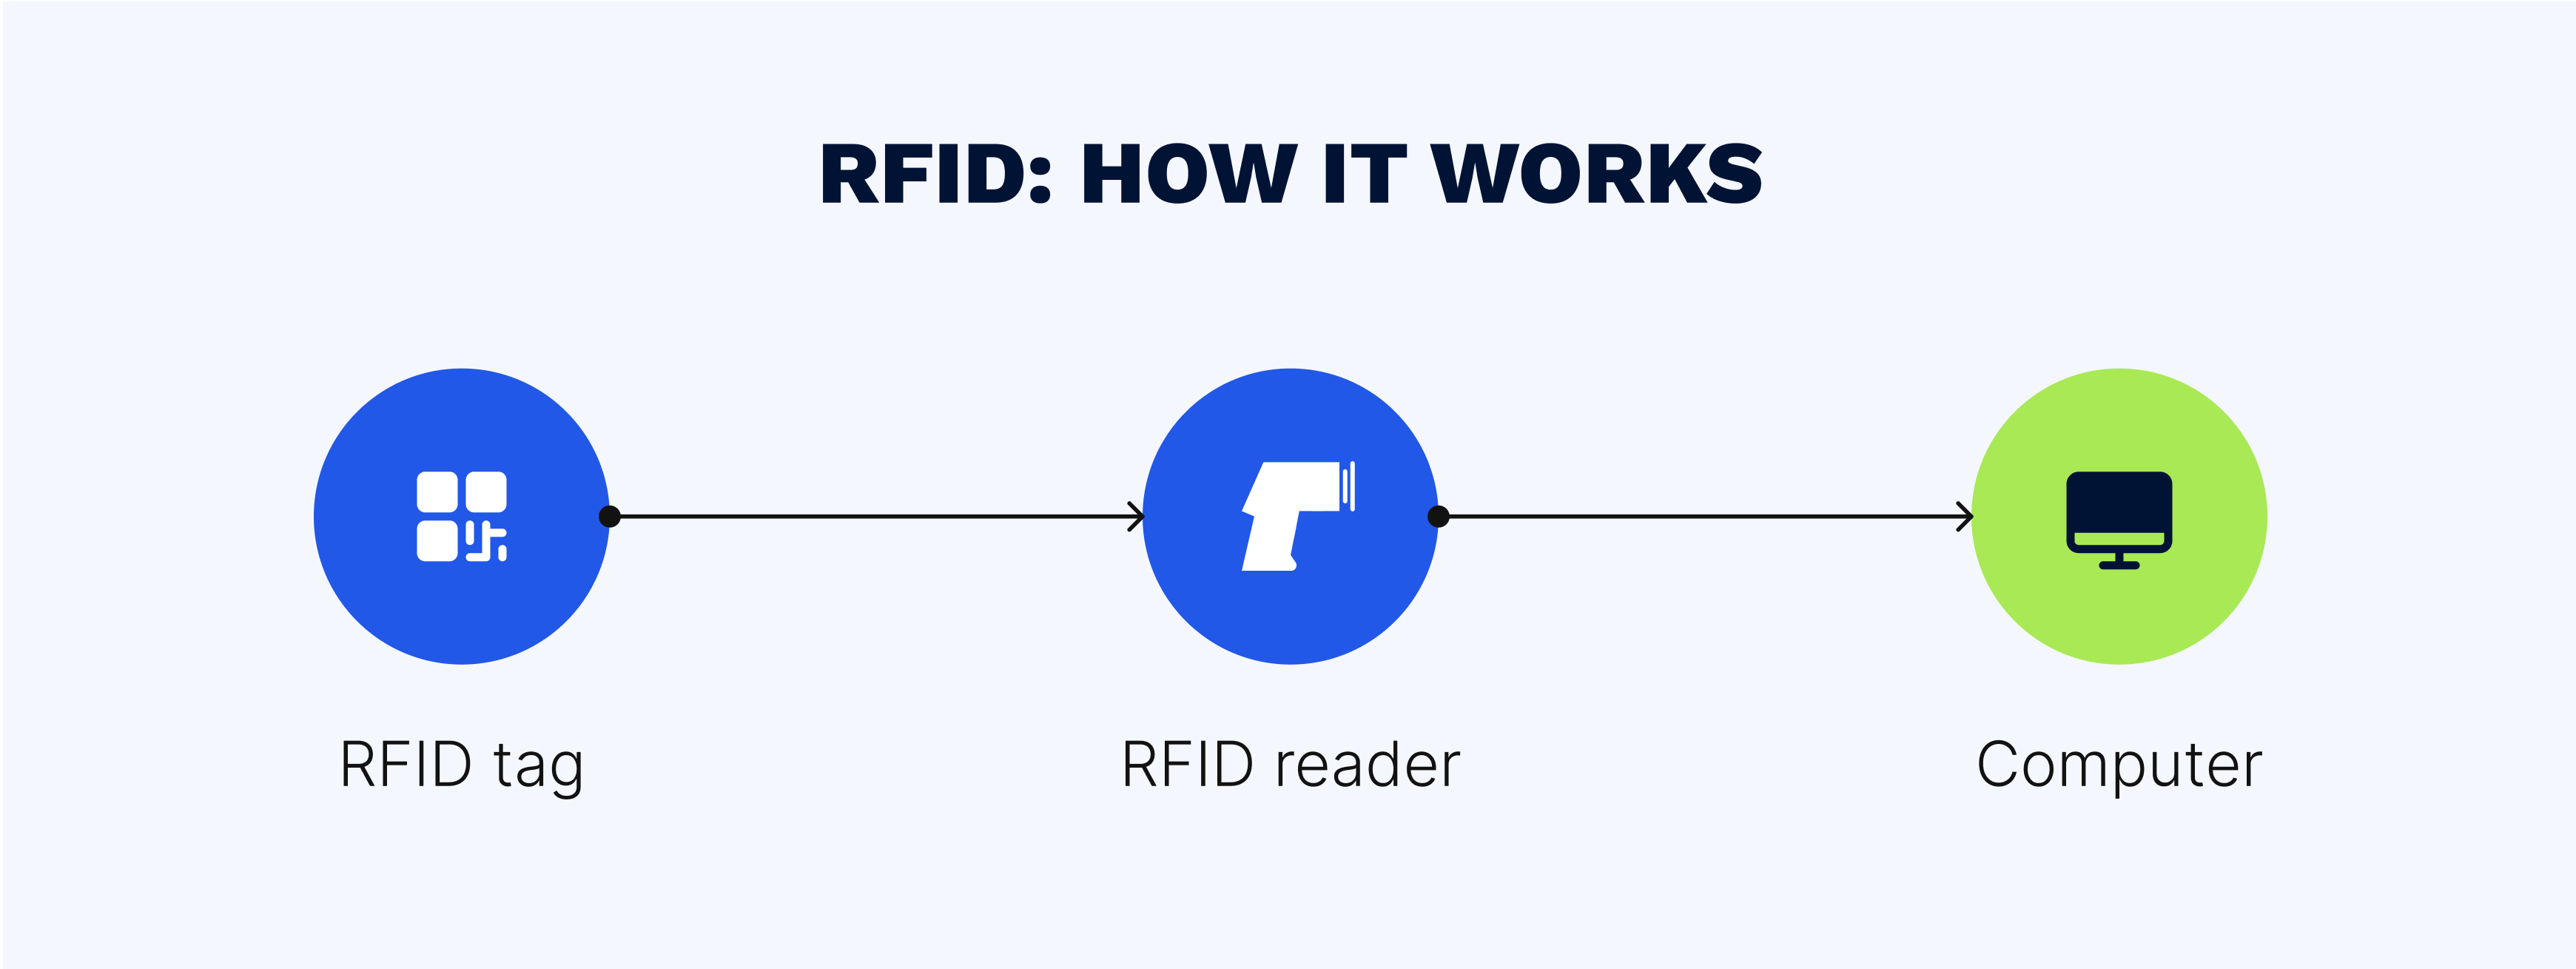 RFID in retail